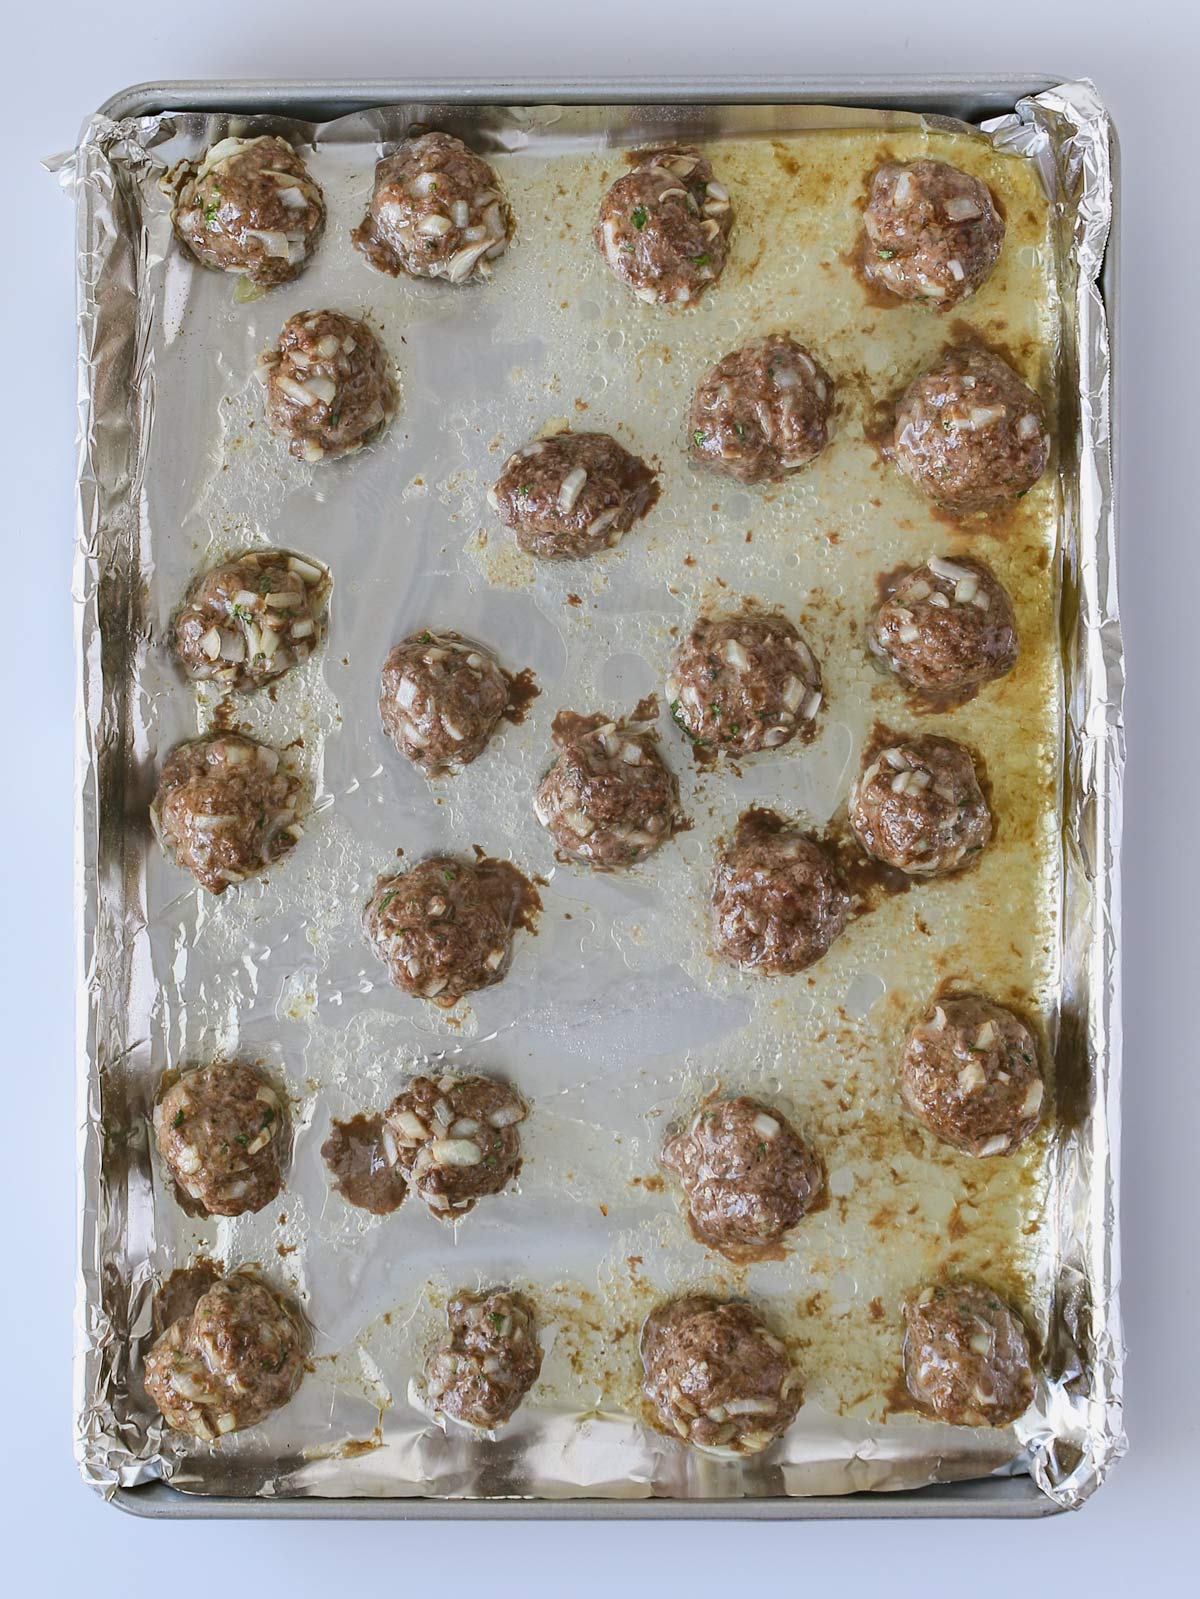 baked meatballs on lined baking sheet.